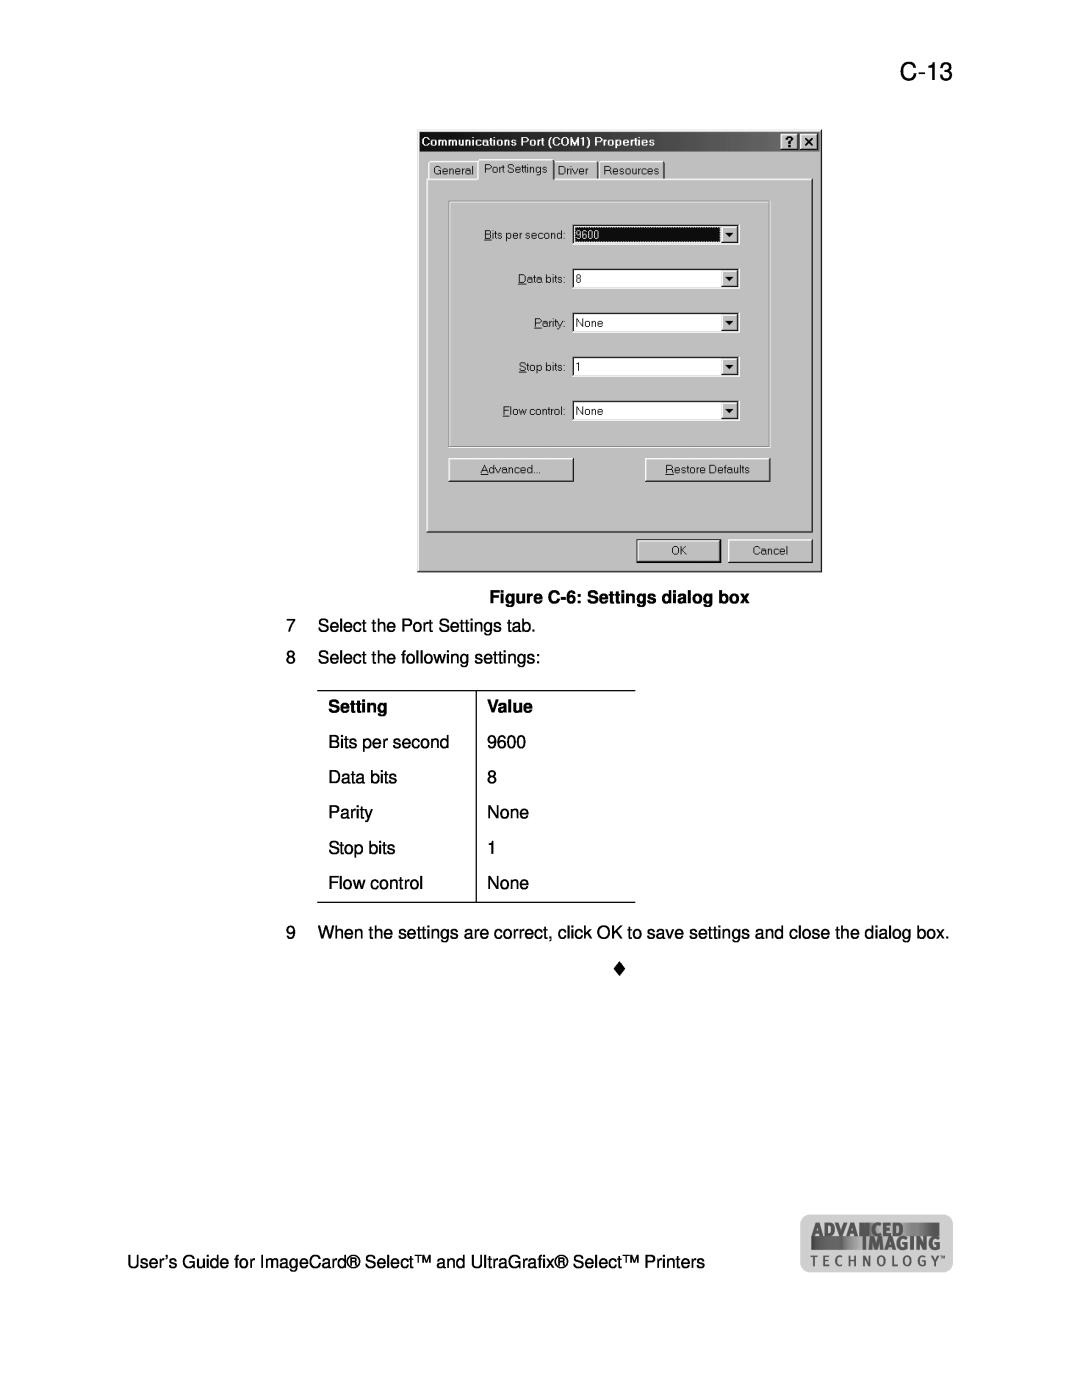 Datacard Group ImageCard SelectTM and UltraGrafix SelectTM Printers manual C-13, Figure C-6 Settings dialog box, Value 